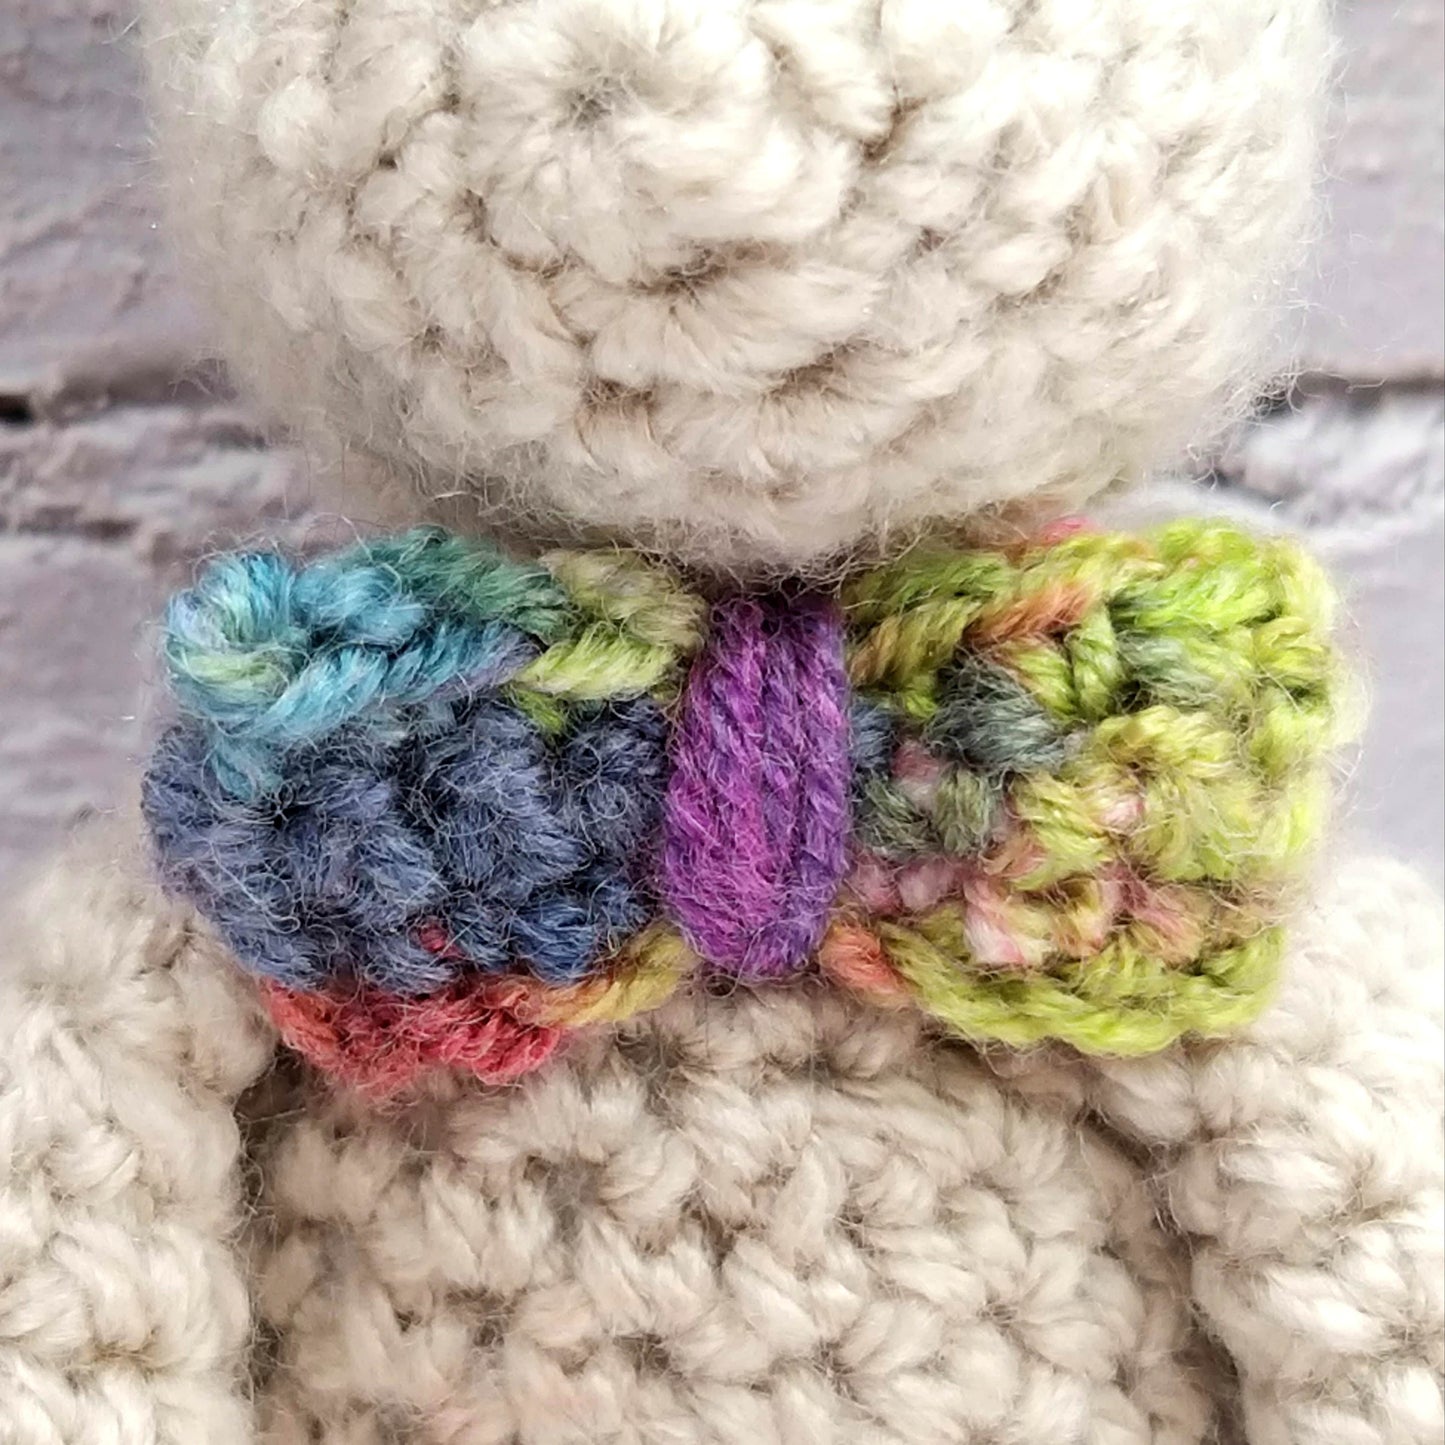 Baby Bunny Crochet Pattern - PDF